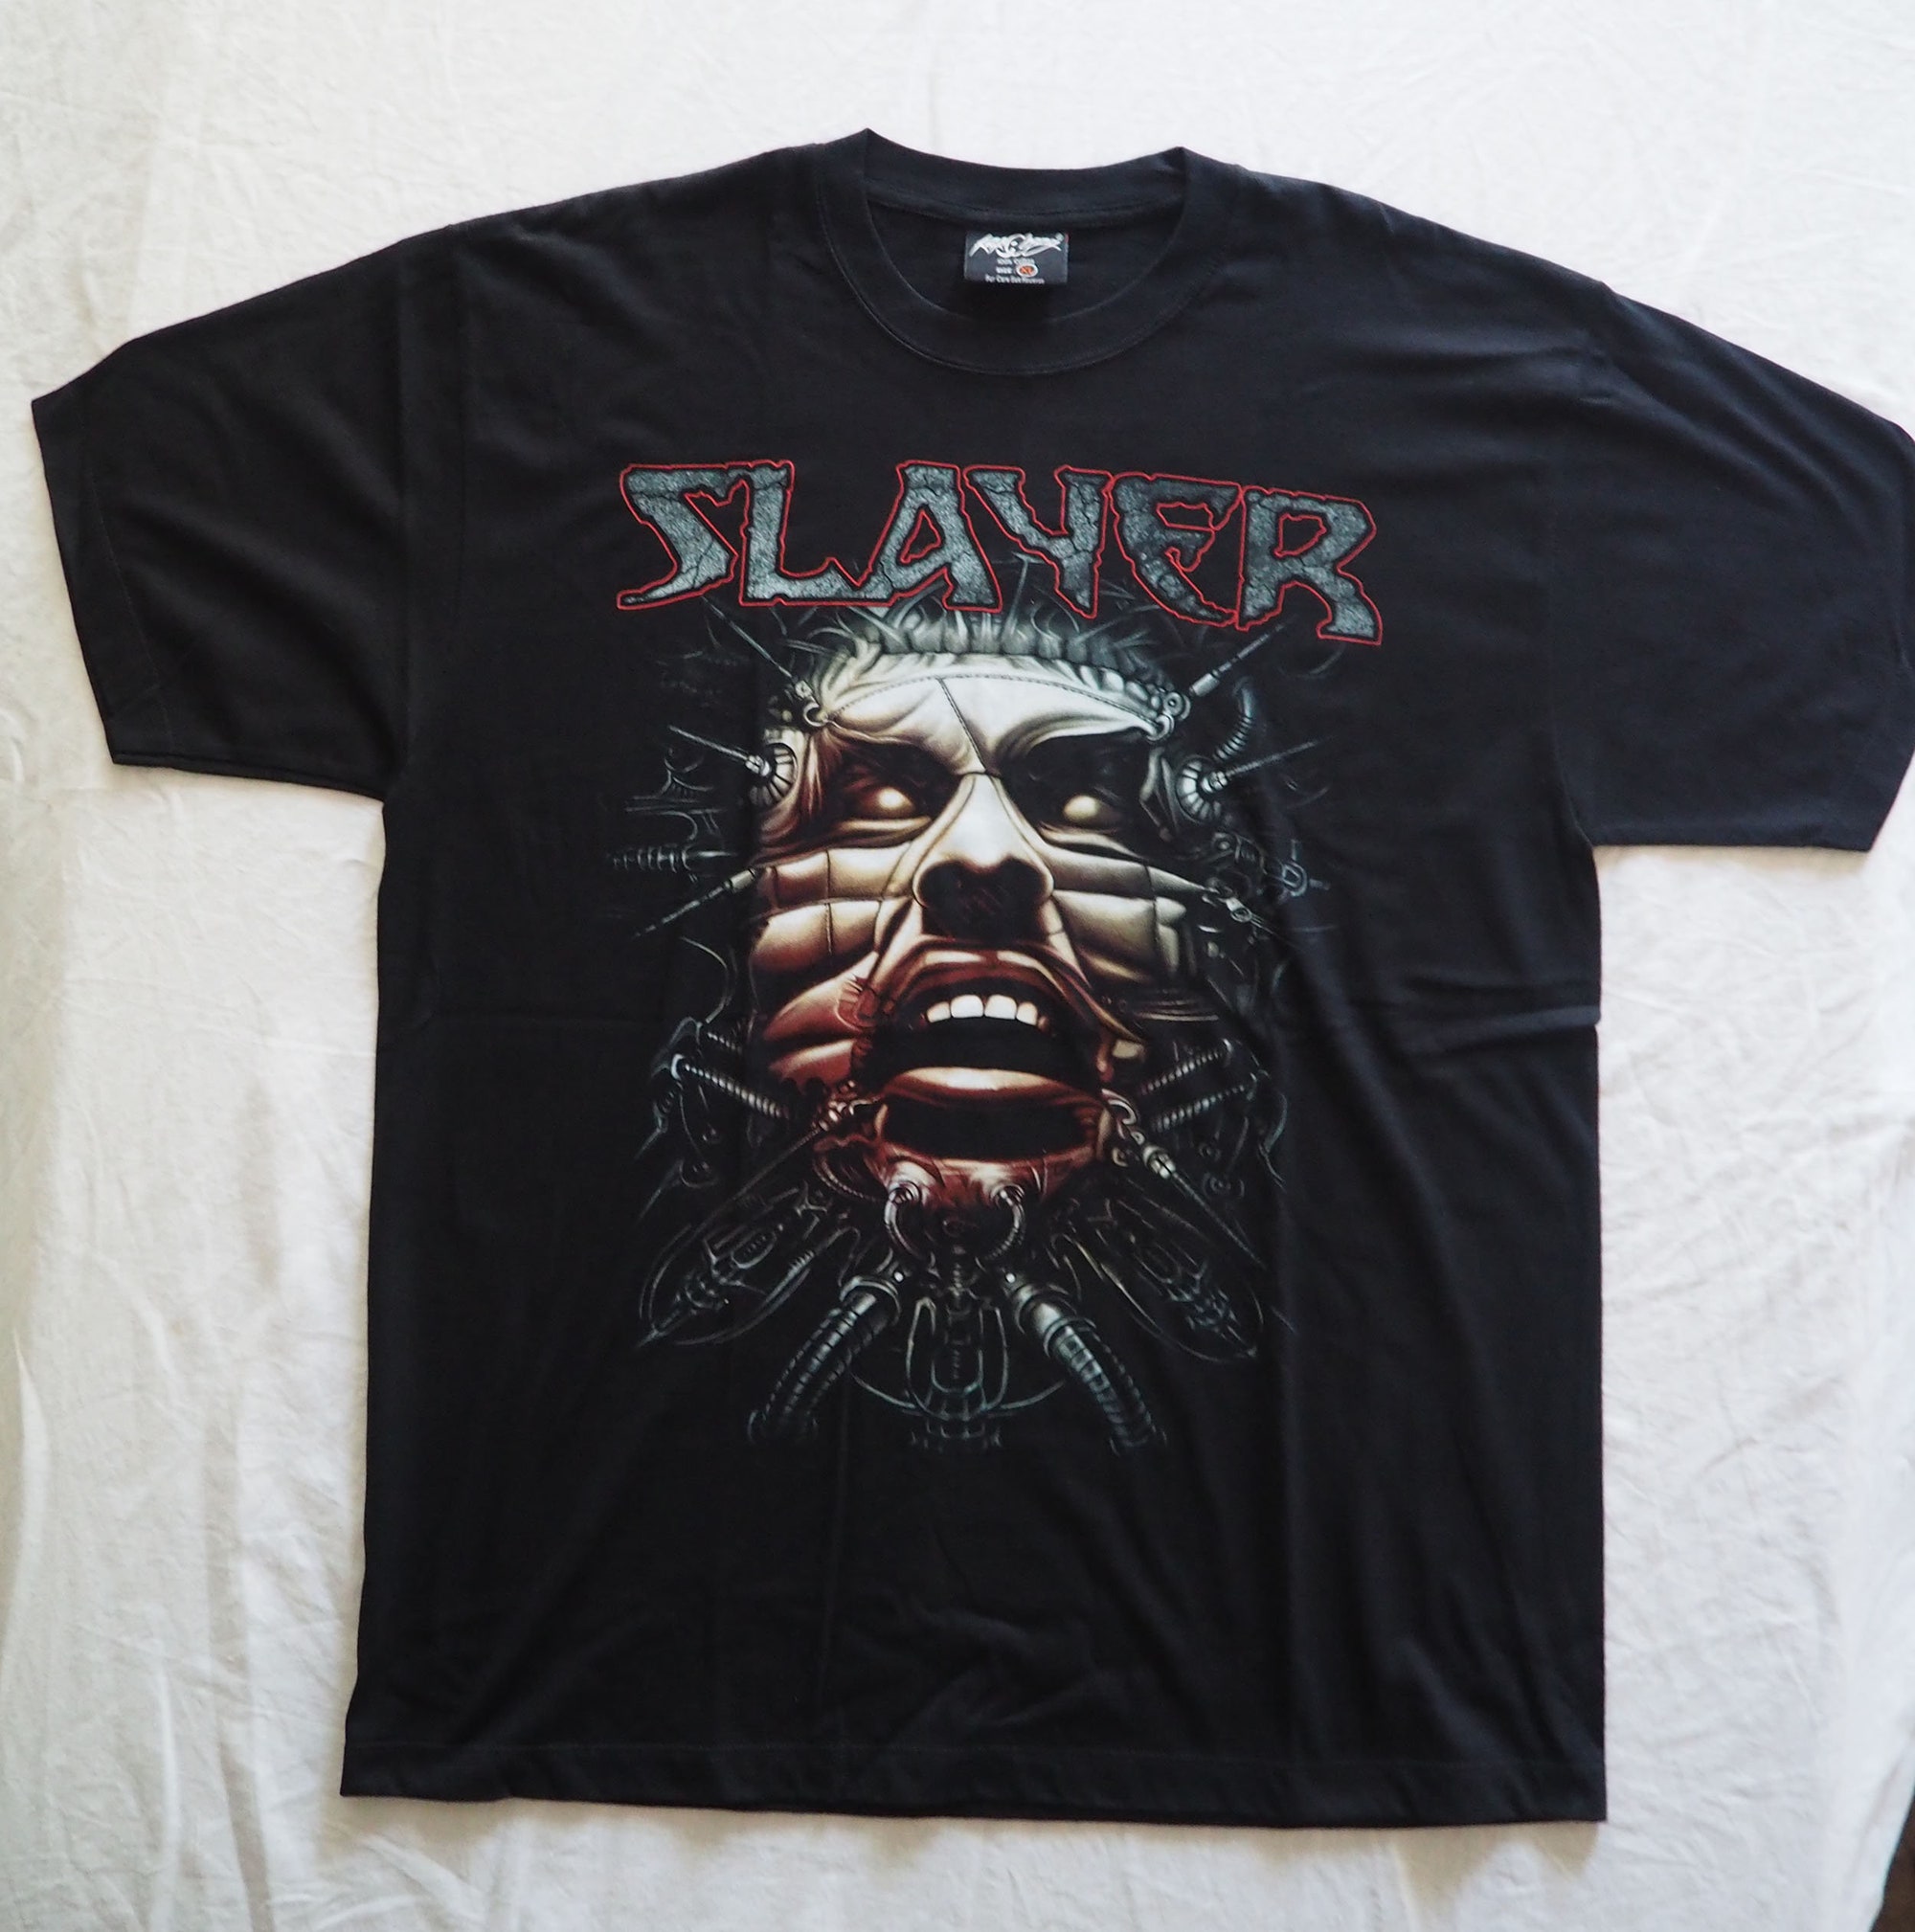 Discover Maglietta T-Shirt Slayer Uomo Donna Bambini Vintage